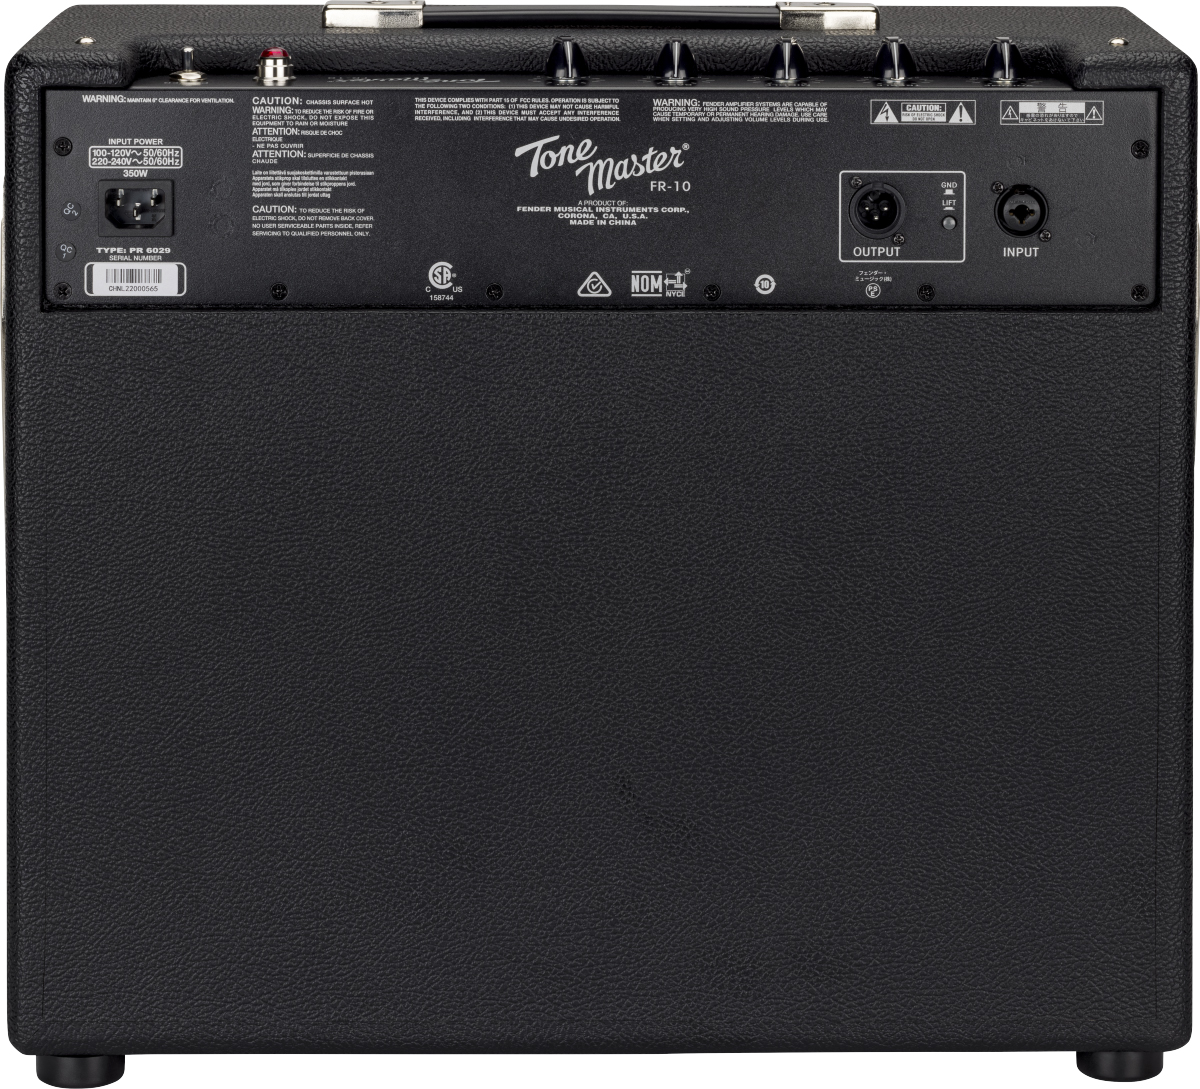 Fender Tone Master Fr-10 Powered Speaker Cab 1x10 1000w - Electric guitar combo amp - Variation 1